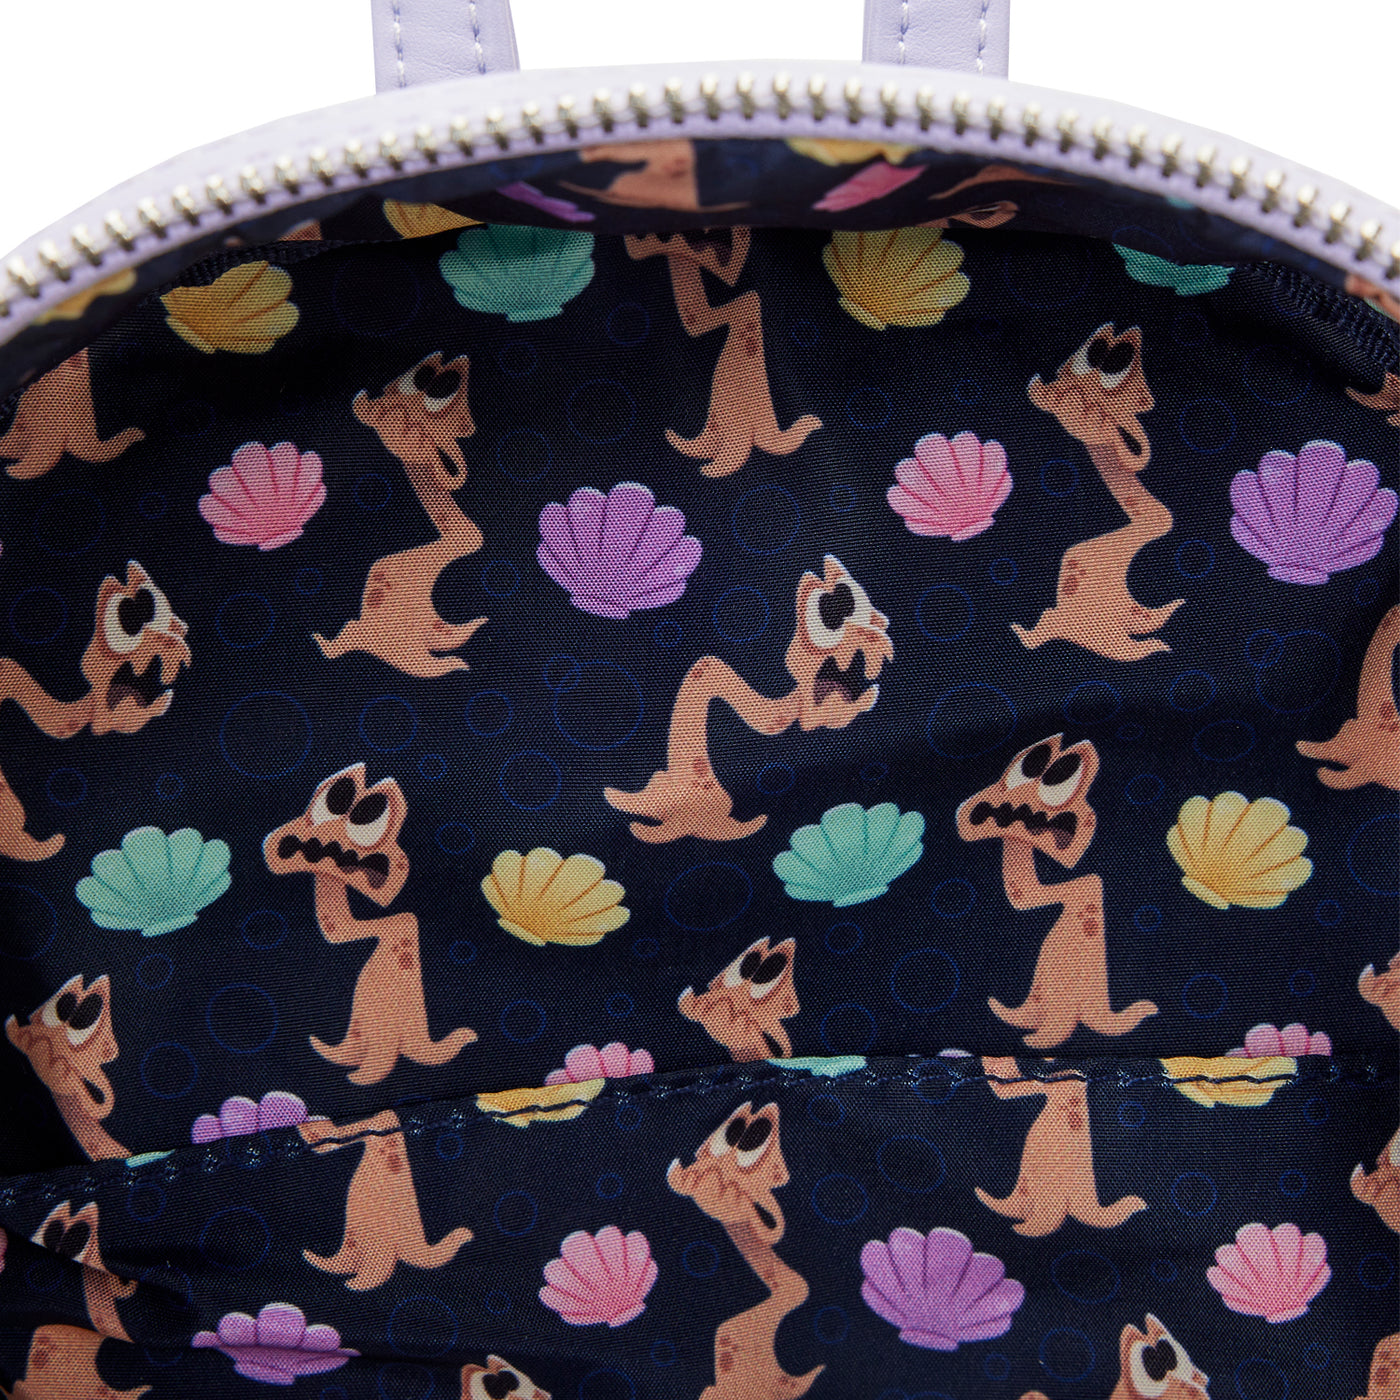 Disney The Little Mermaid Ursula Lair Mini Backpack